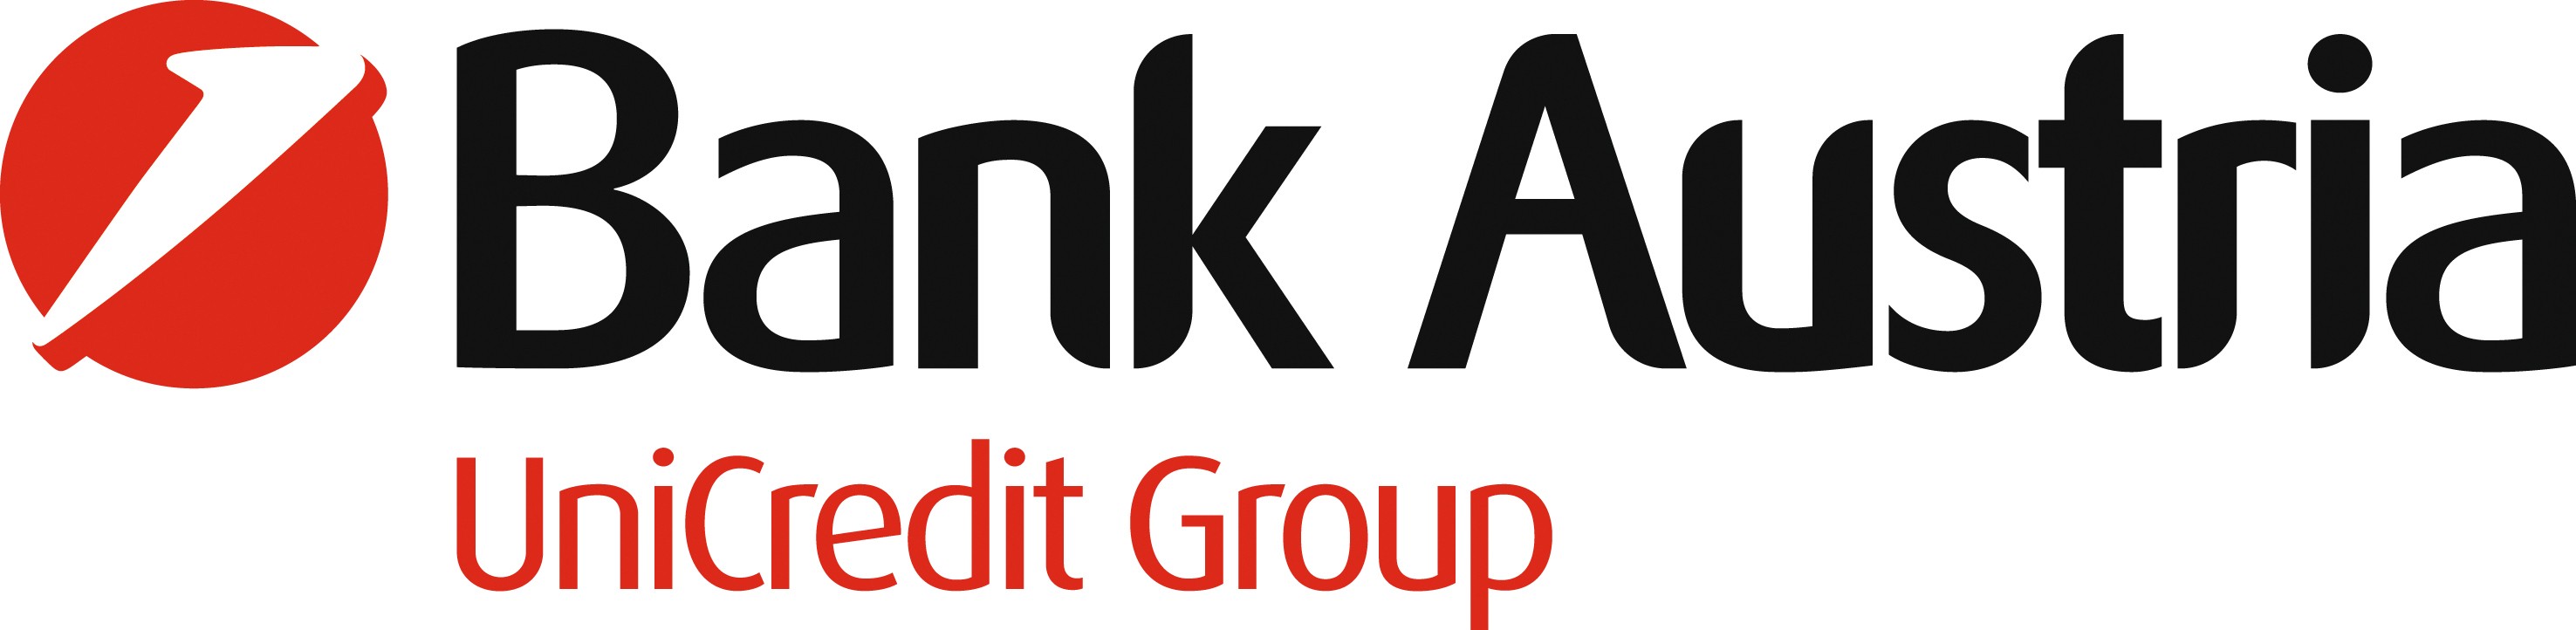 Bank Austria Logo photo - 1